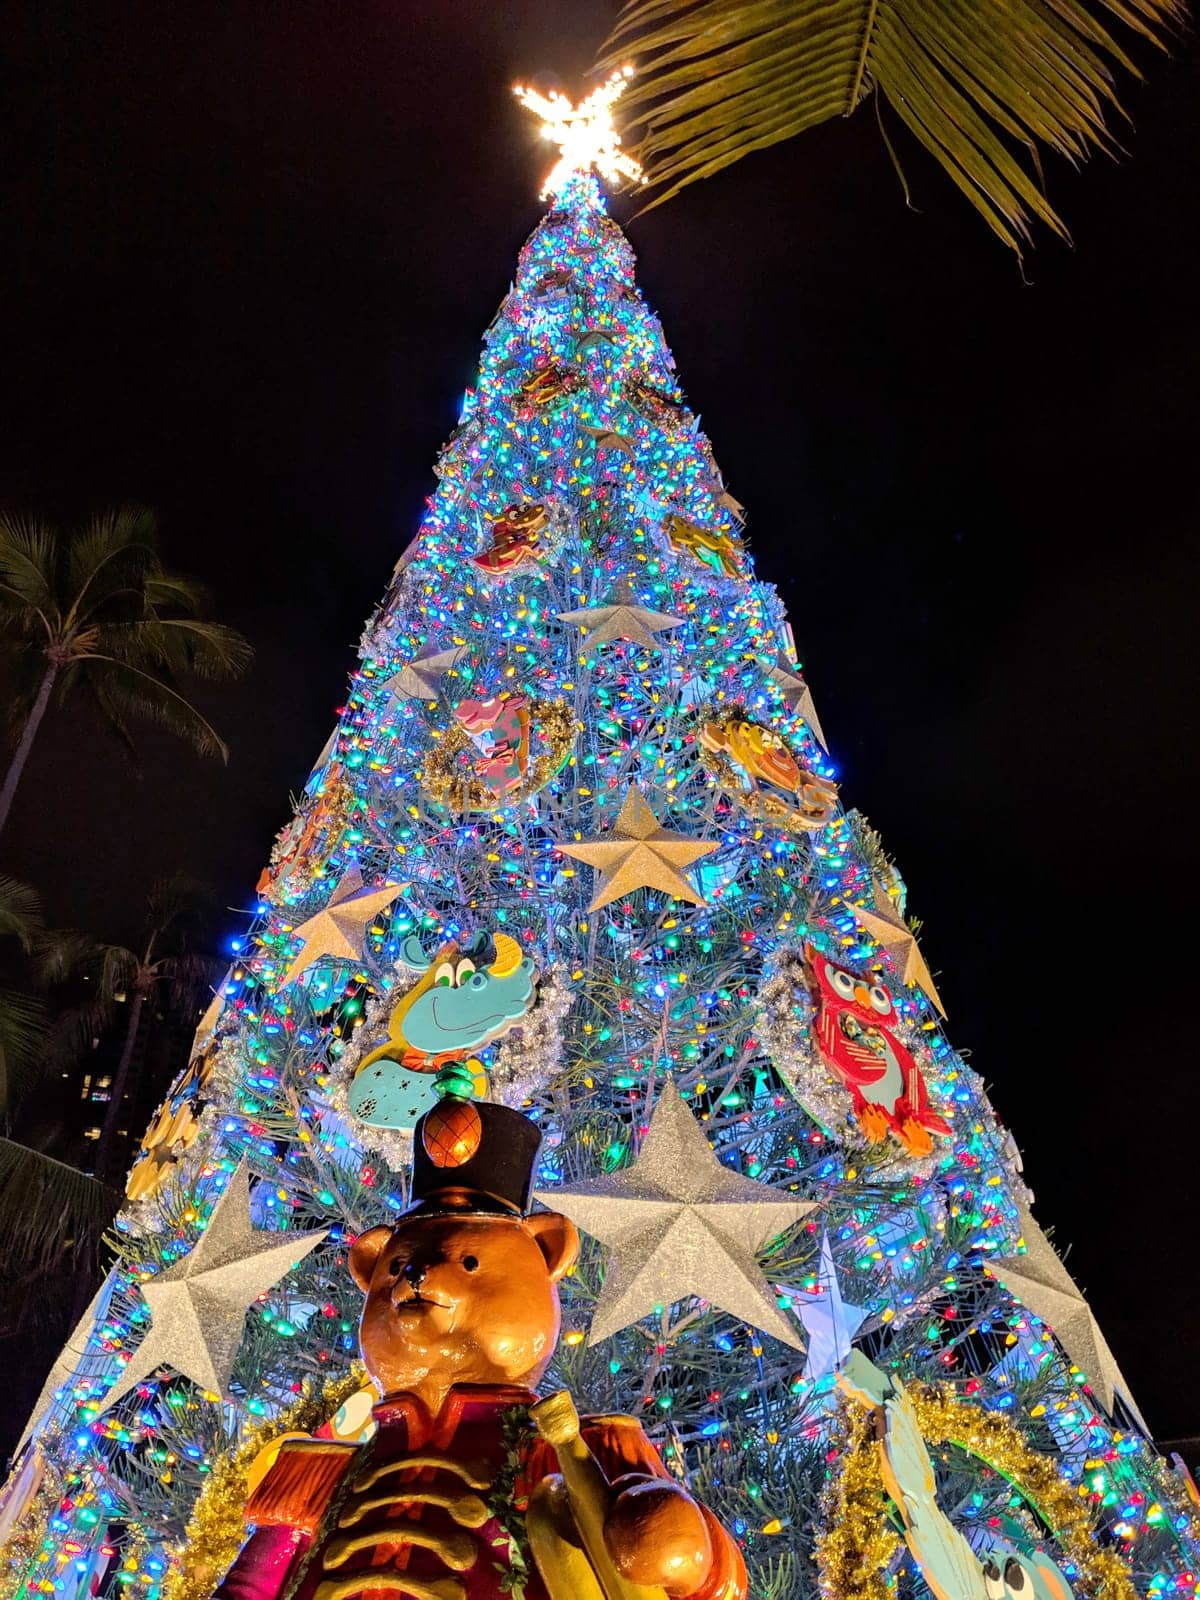 A Tropical Christmas Tree at Honolulu Hale, Hawaii by EricGBVD